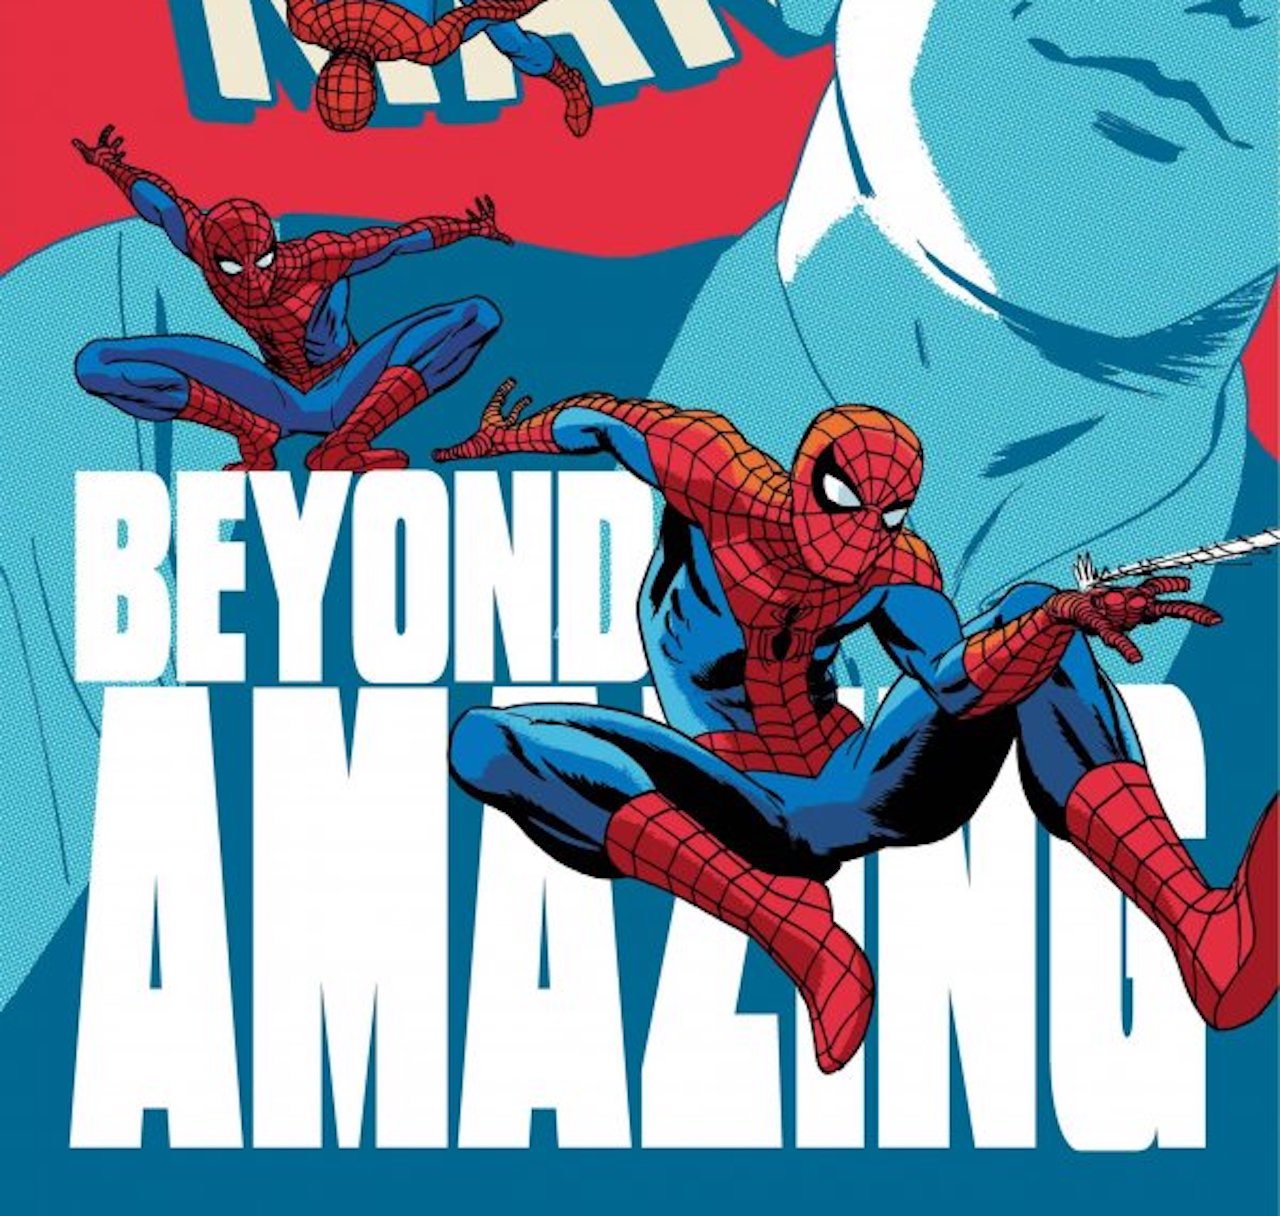 'Amazing Spider-Man' #10 gets surprisingly romantic